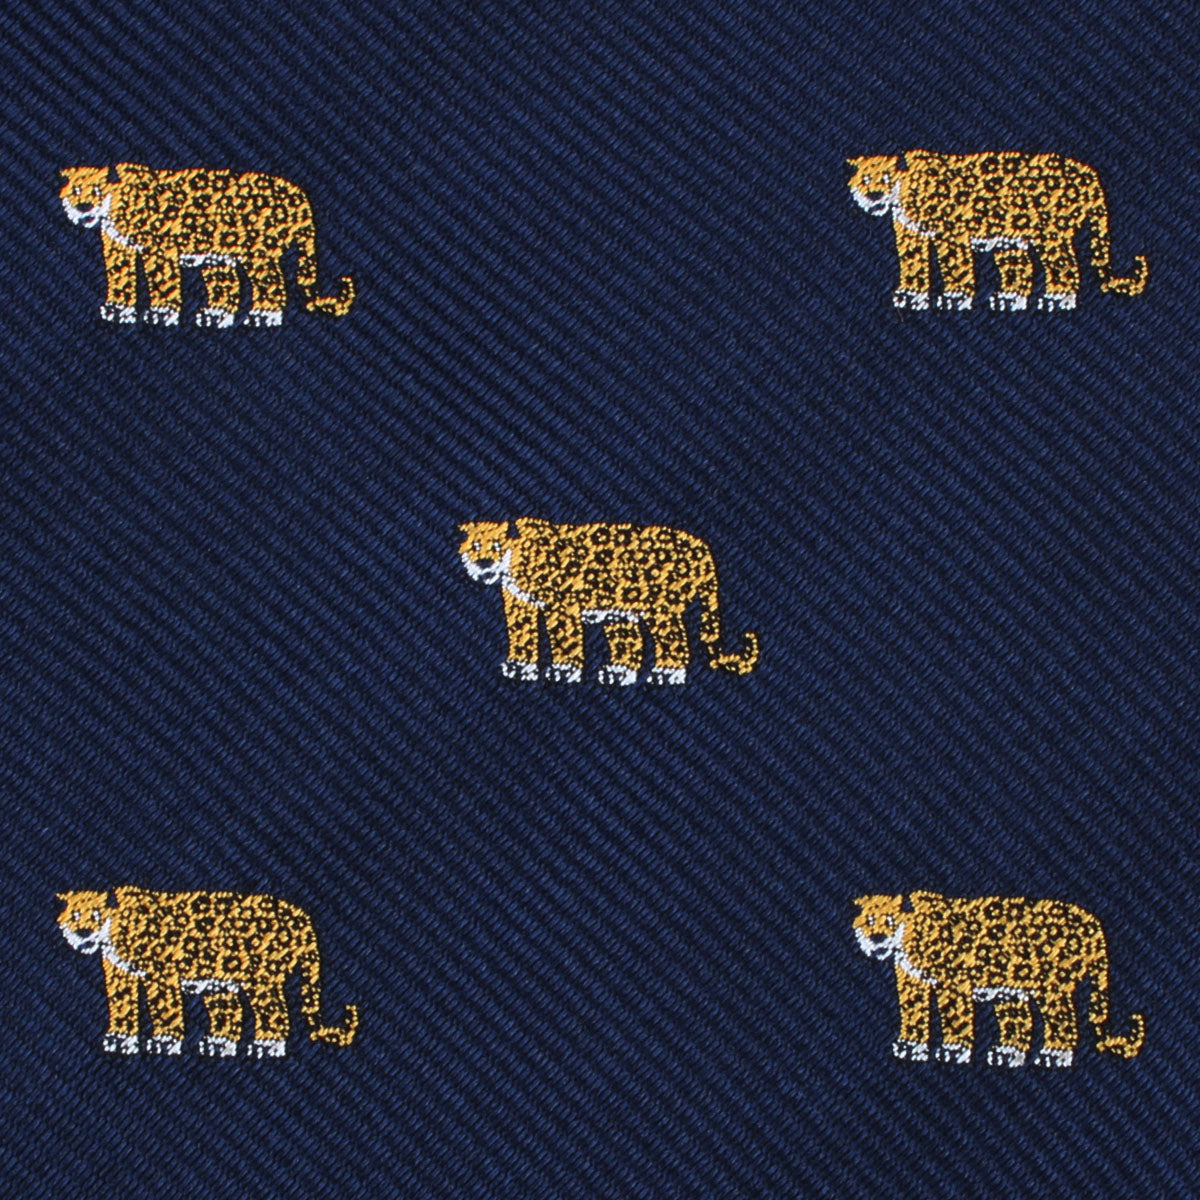 African Cheetah Necktie Fabric